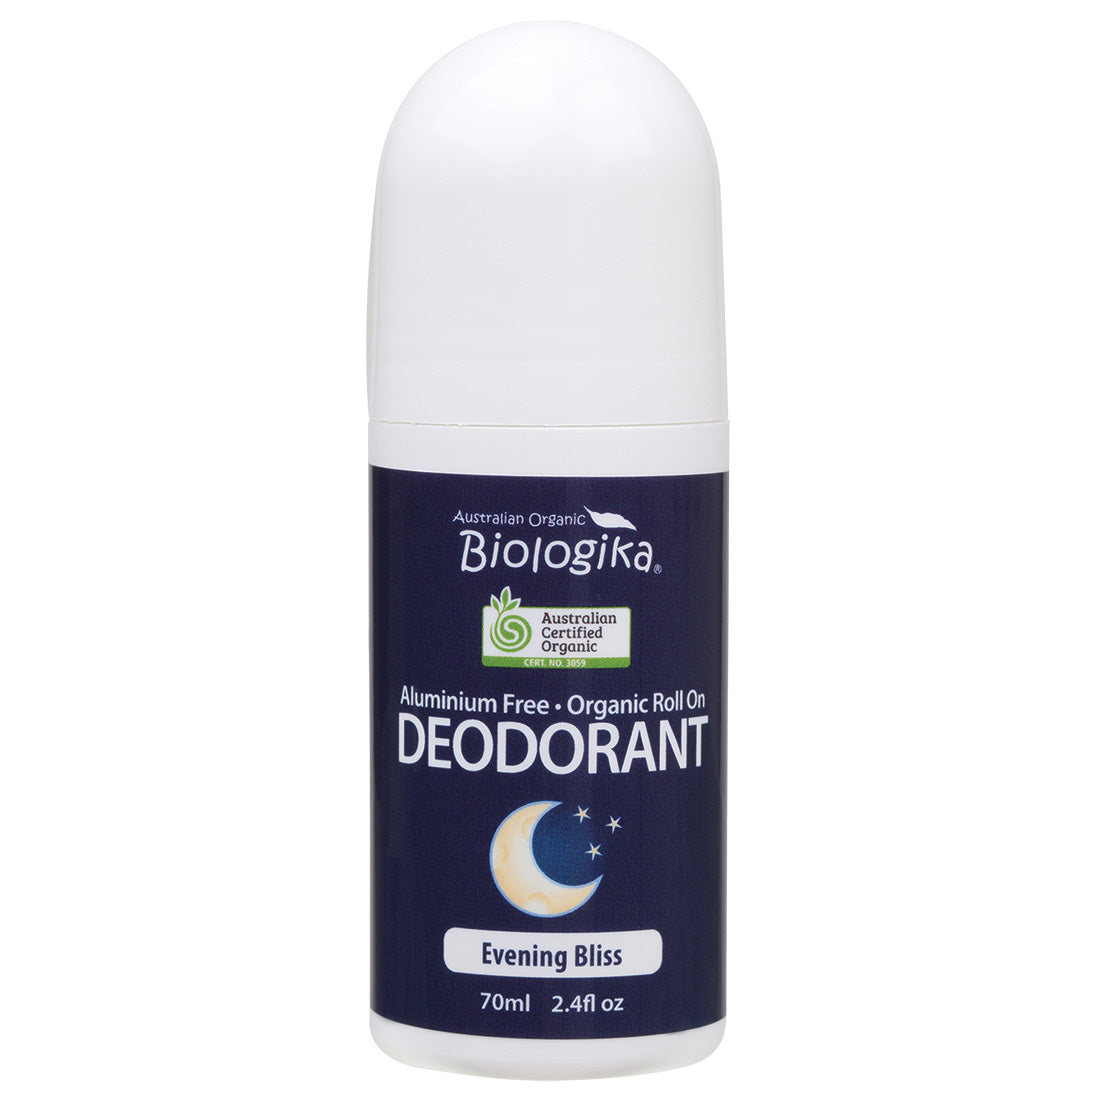 Biologika - Deodorant (Evening Bliss)